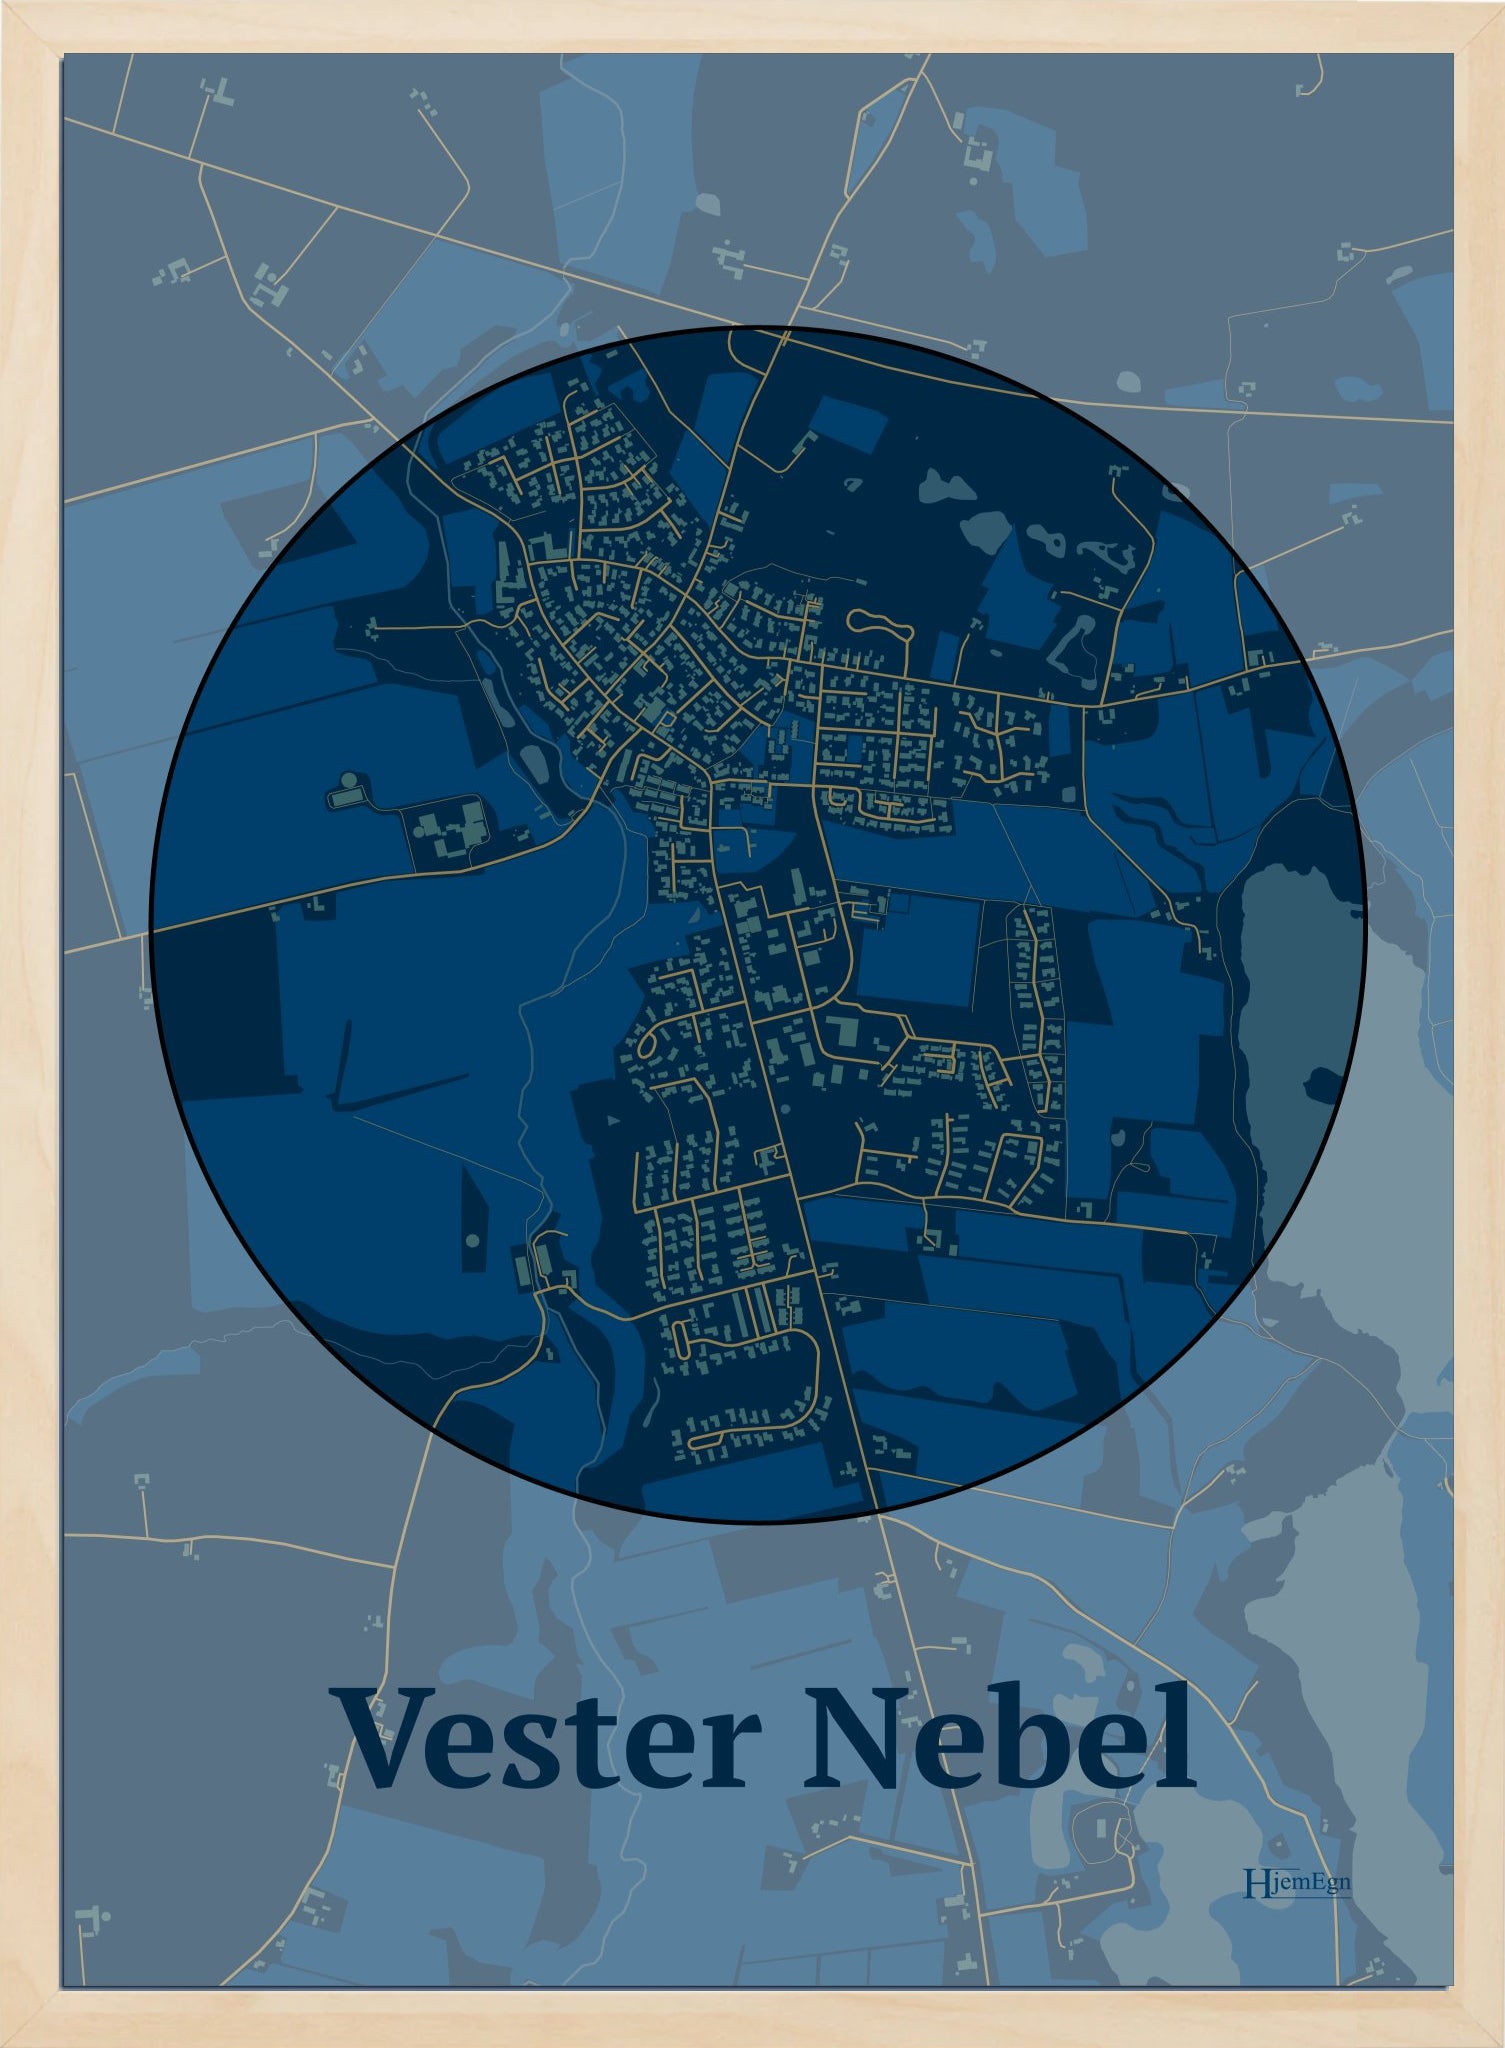 Vester Nebel plakat i farve mørk blå og HjemEgn.dk design centrum. Design bykort for Vester Nebel